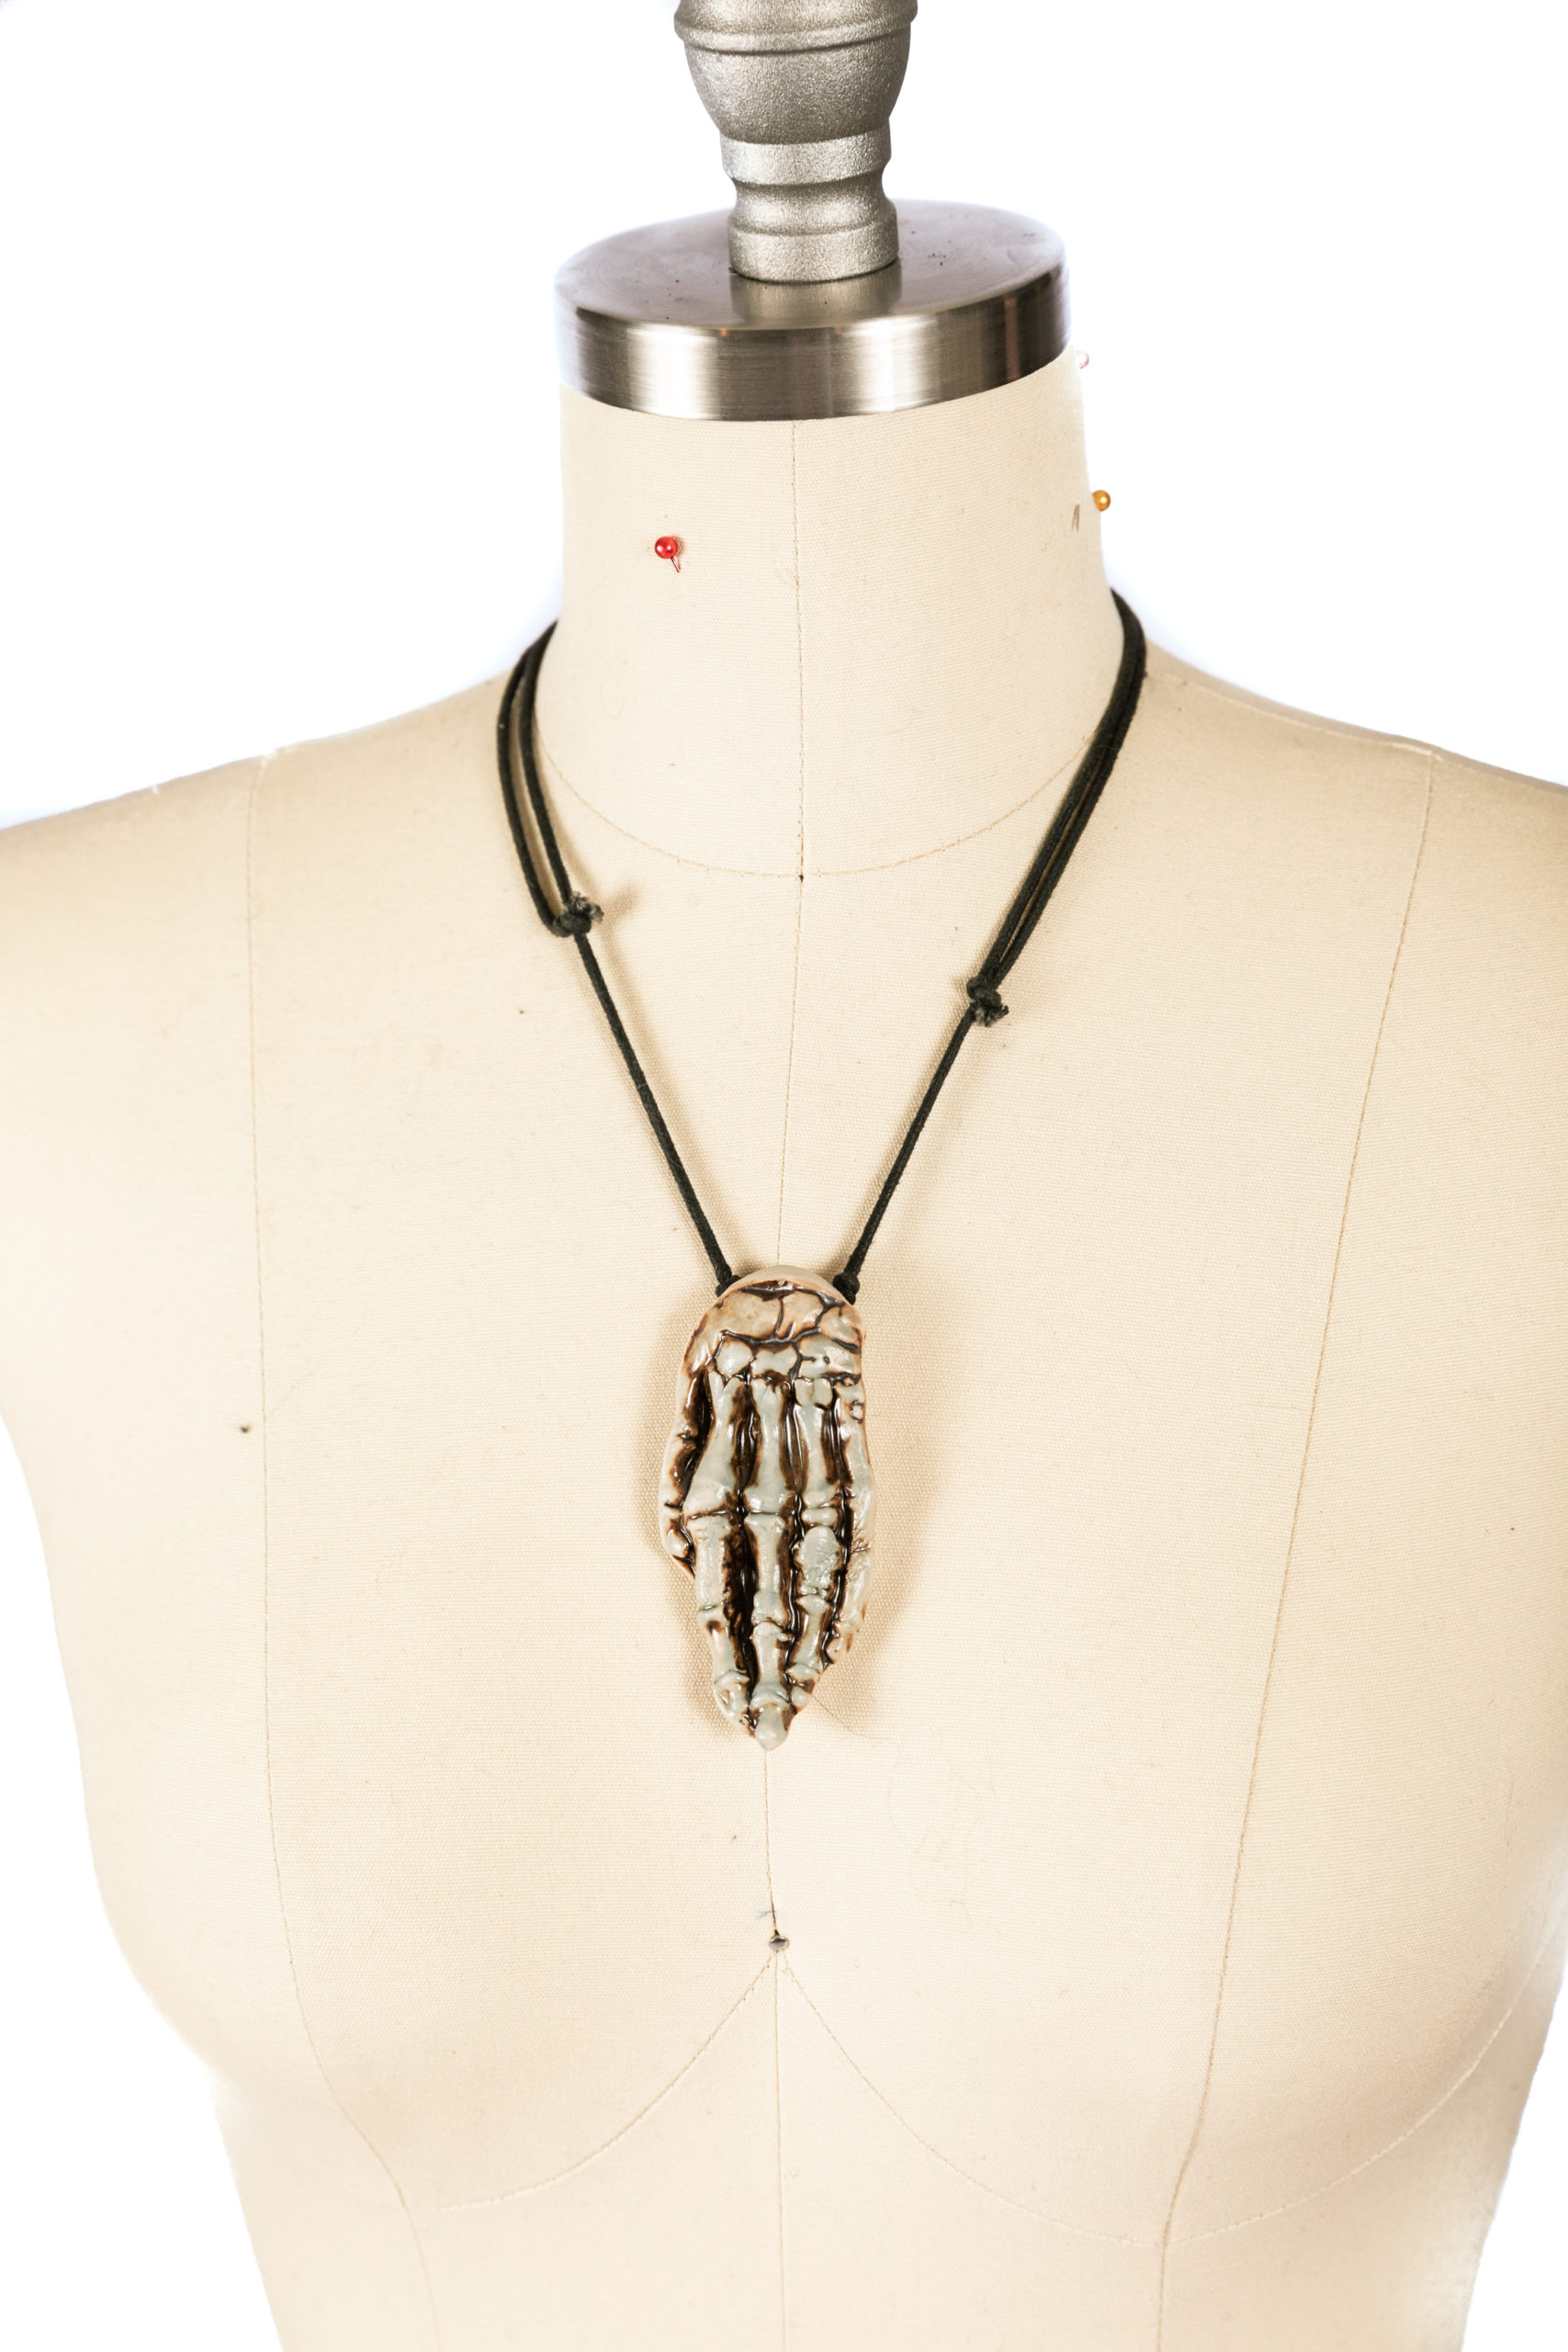 ceramic skeleton hand necklace